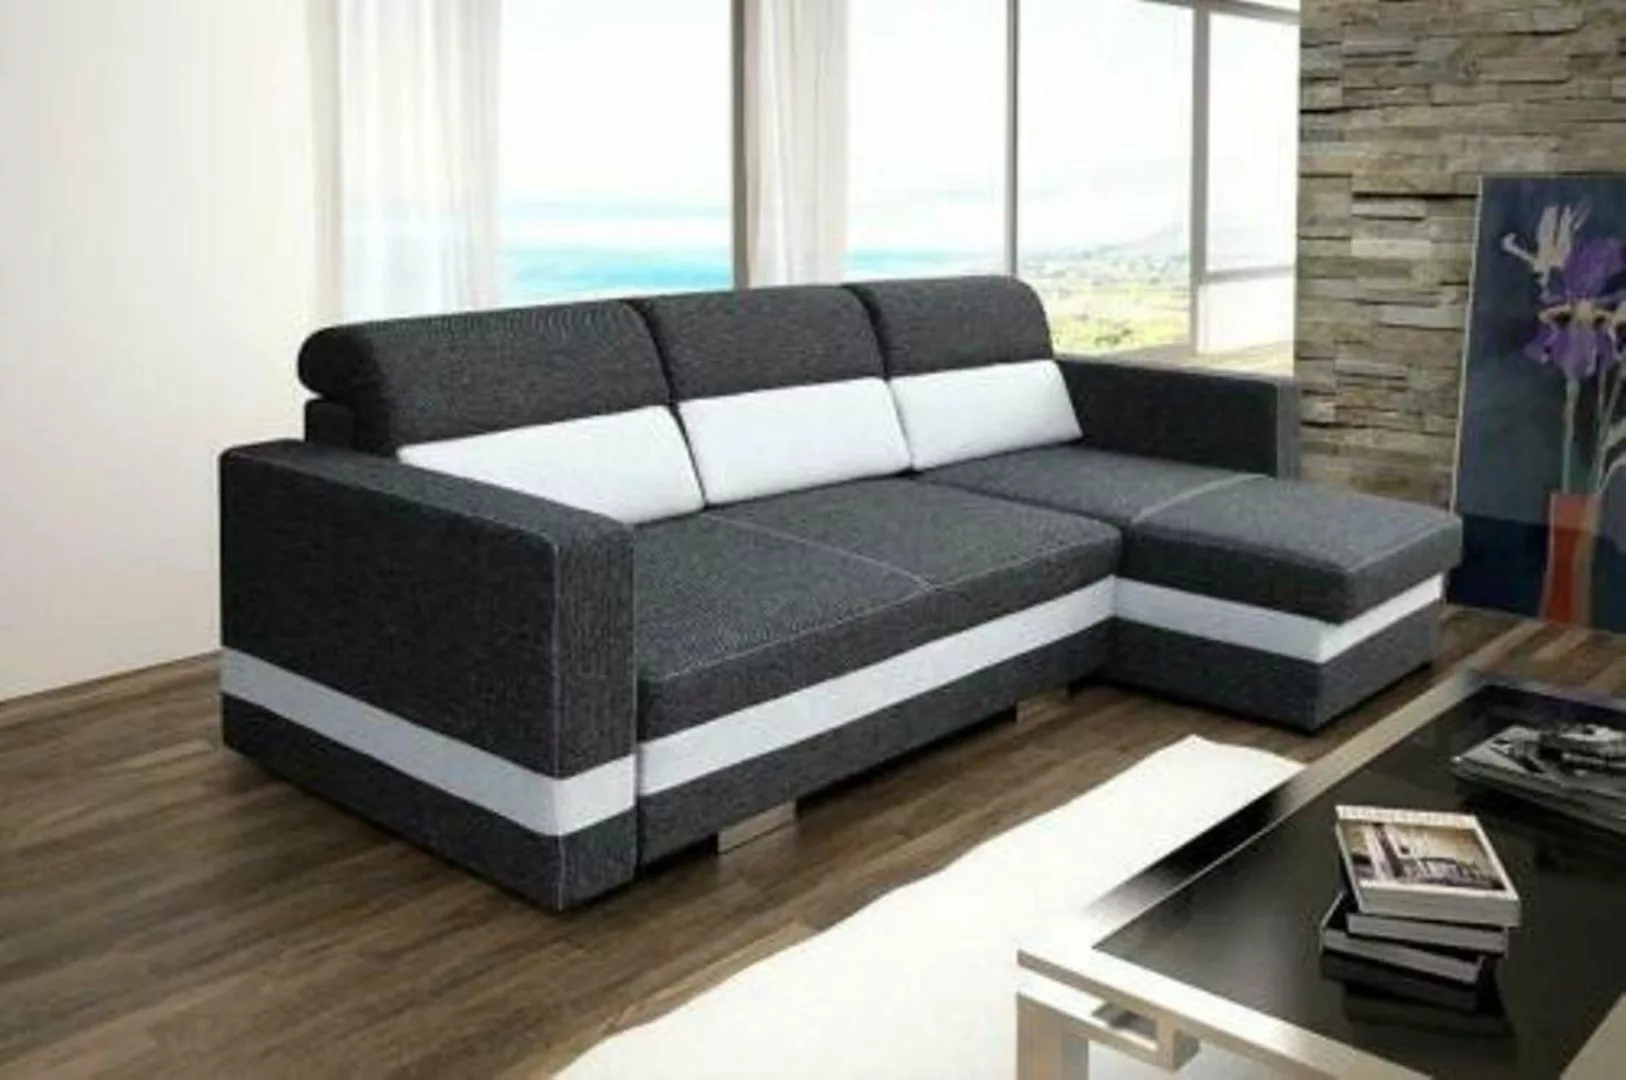 JVmoebel Ecksofa, Schlafsofa Eck Sofa Couch Polster Eck Bettfunktion Neu Sc günstig online kaufen